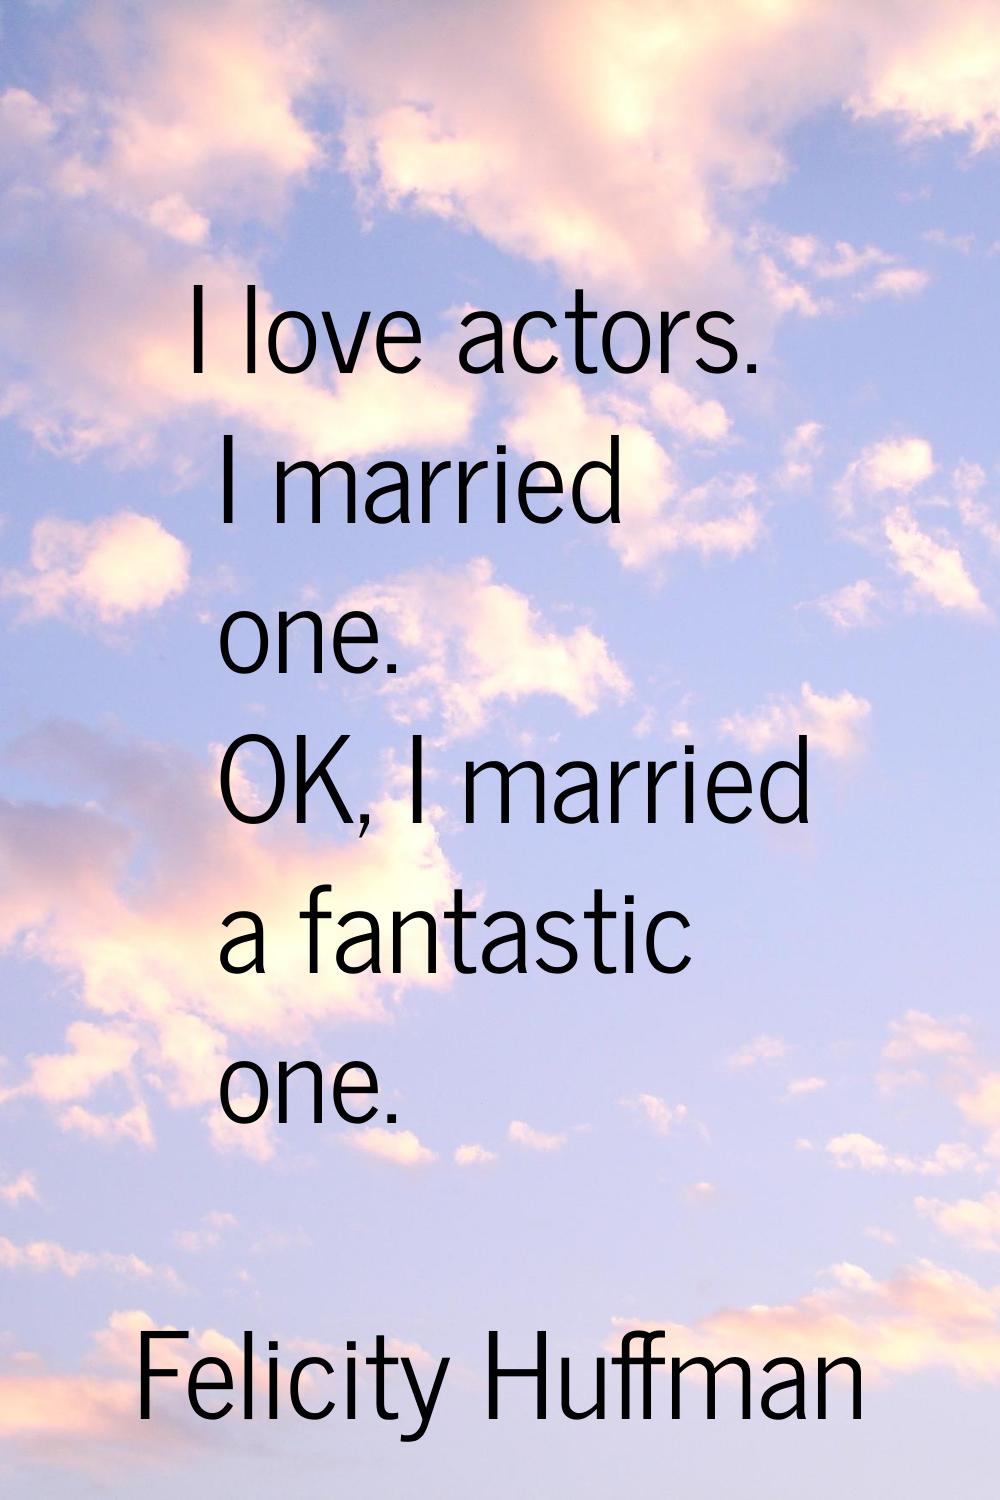 I love actors. I married one. OK, I married a fantastic one.